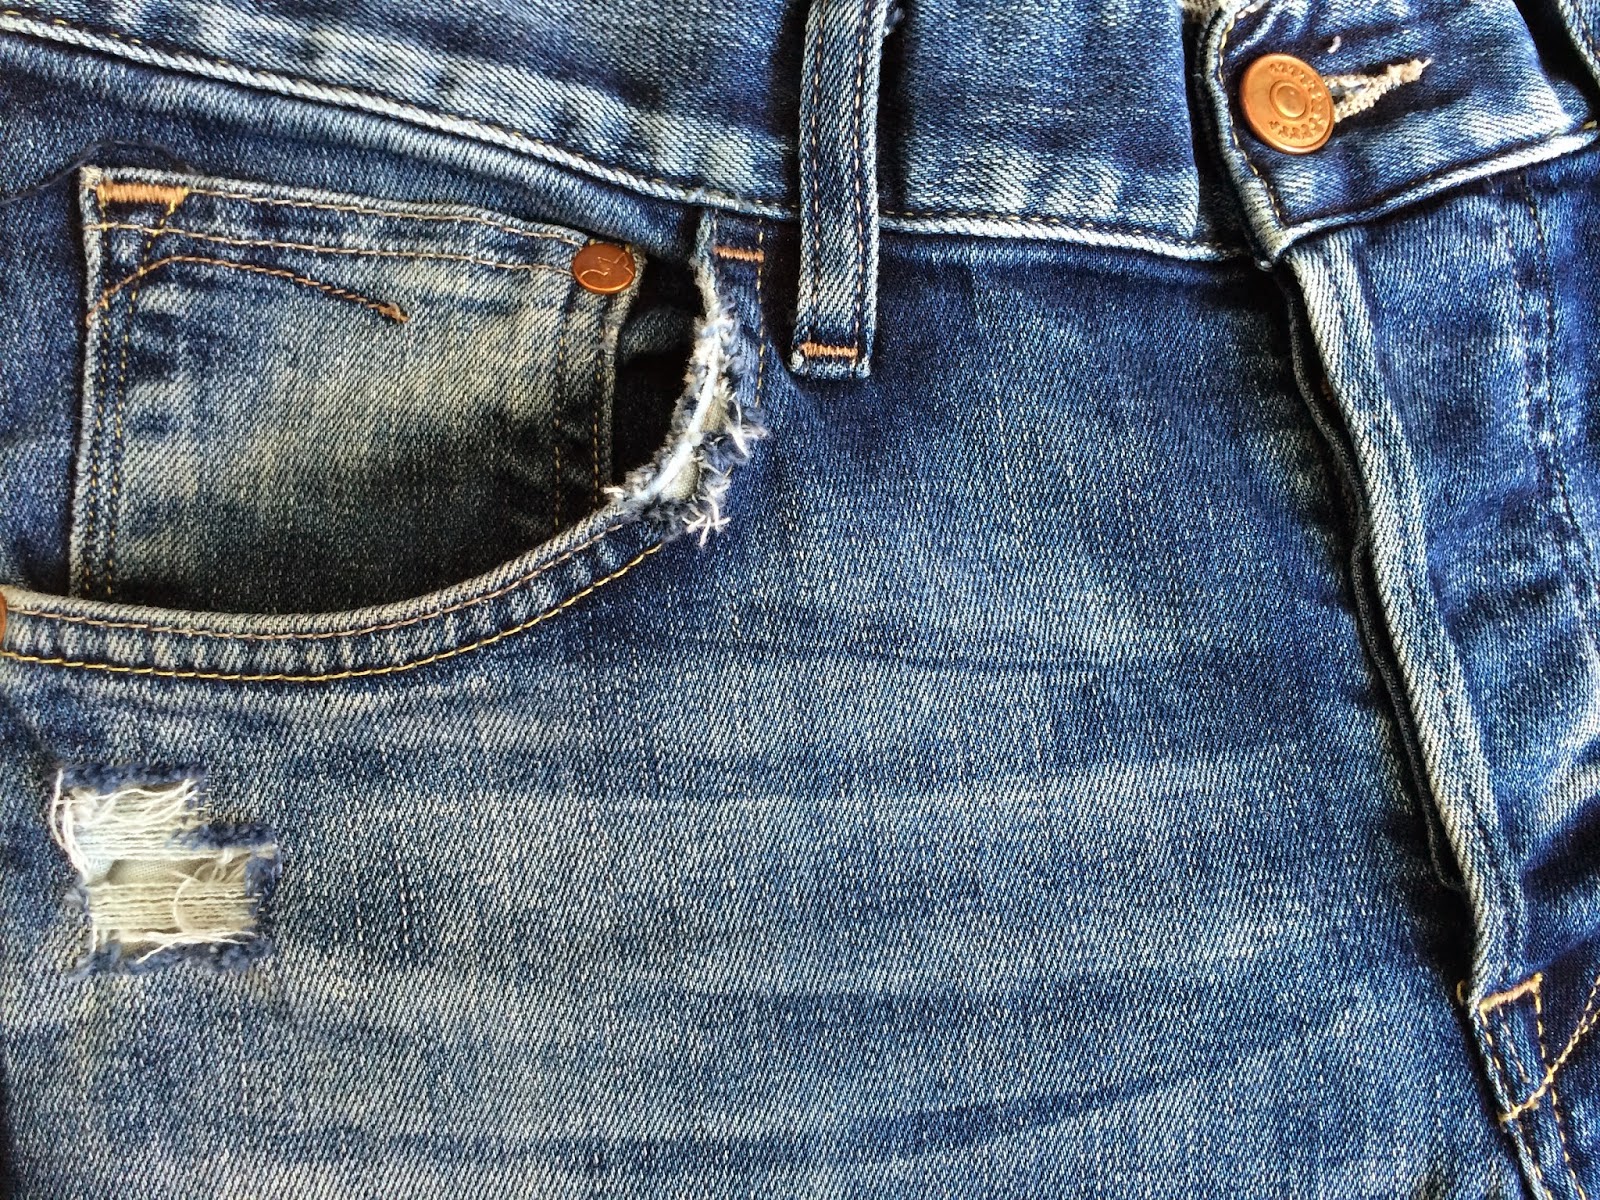 Etrala London Blog : DIY: Distressed Boyfriend Jeans